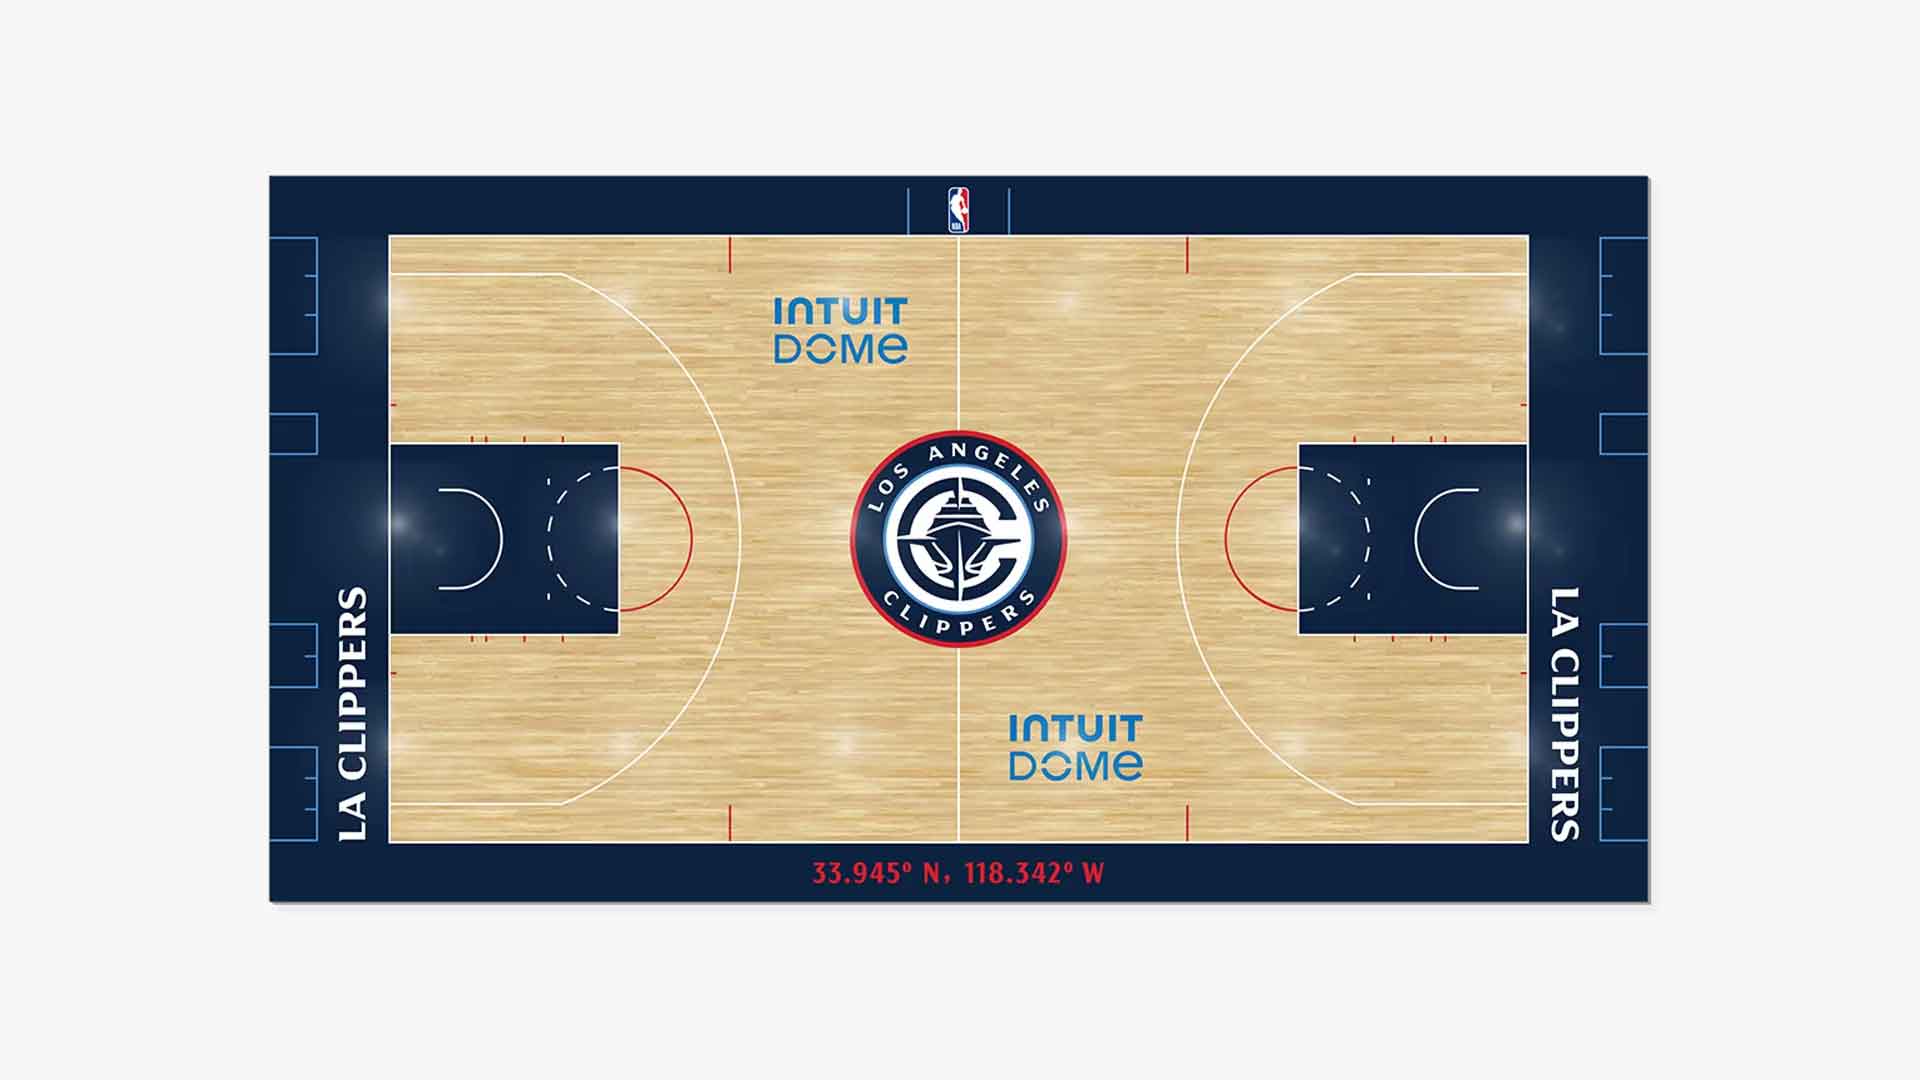 LA Clippers unveil new uniforms, logo and court for 202425 NBC Los